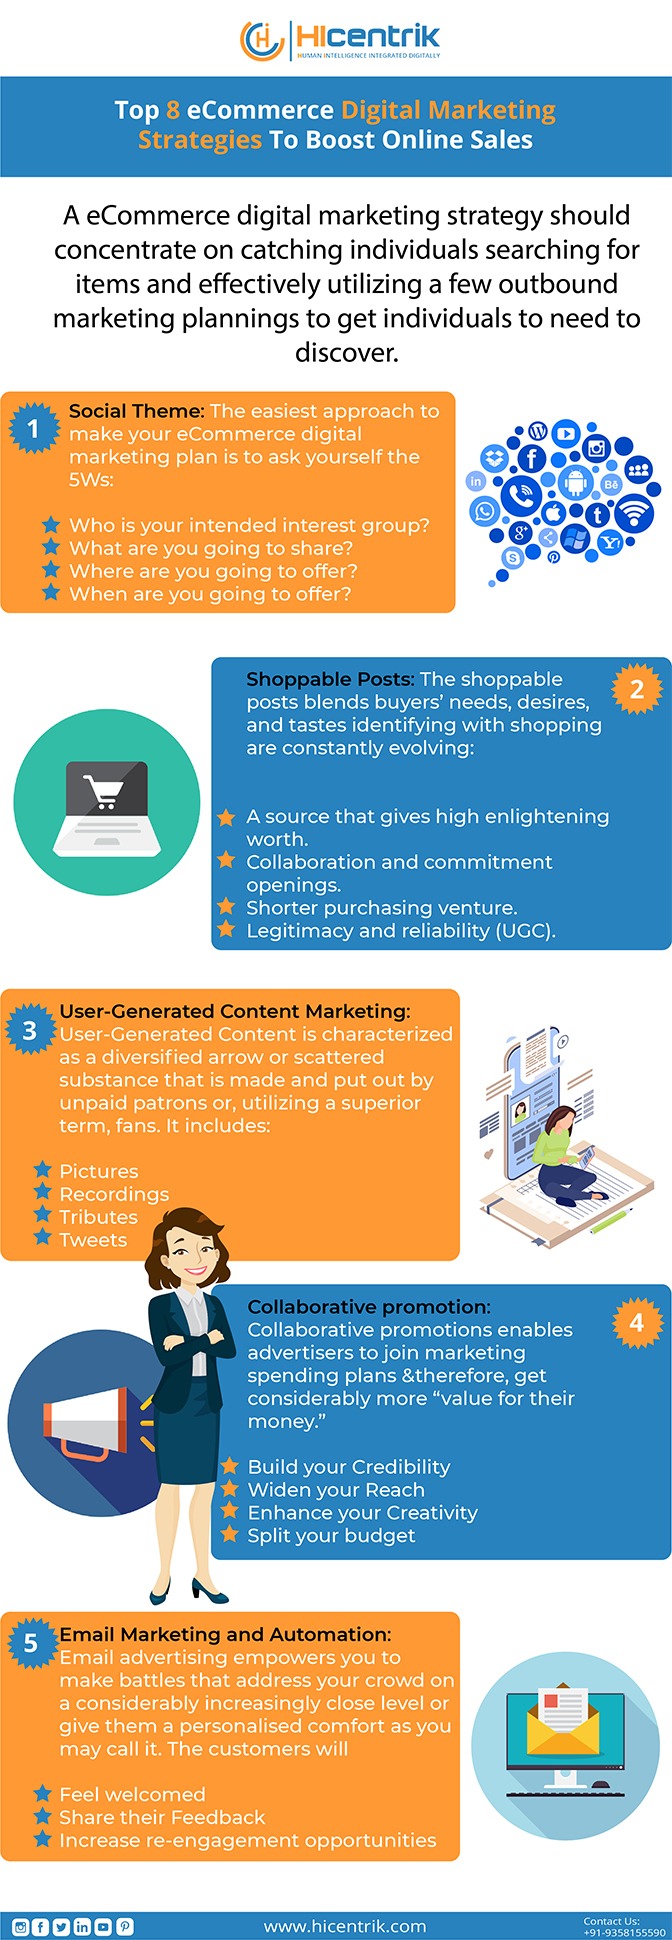 eCommerce Marketing Strategies